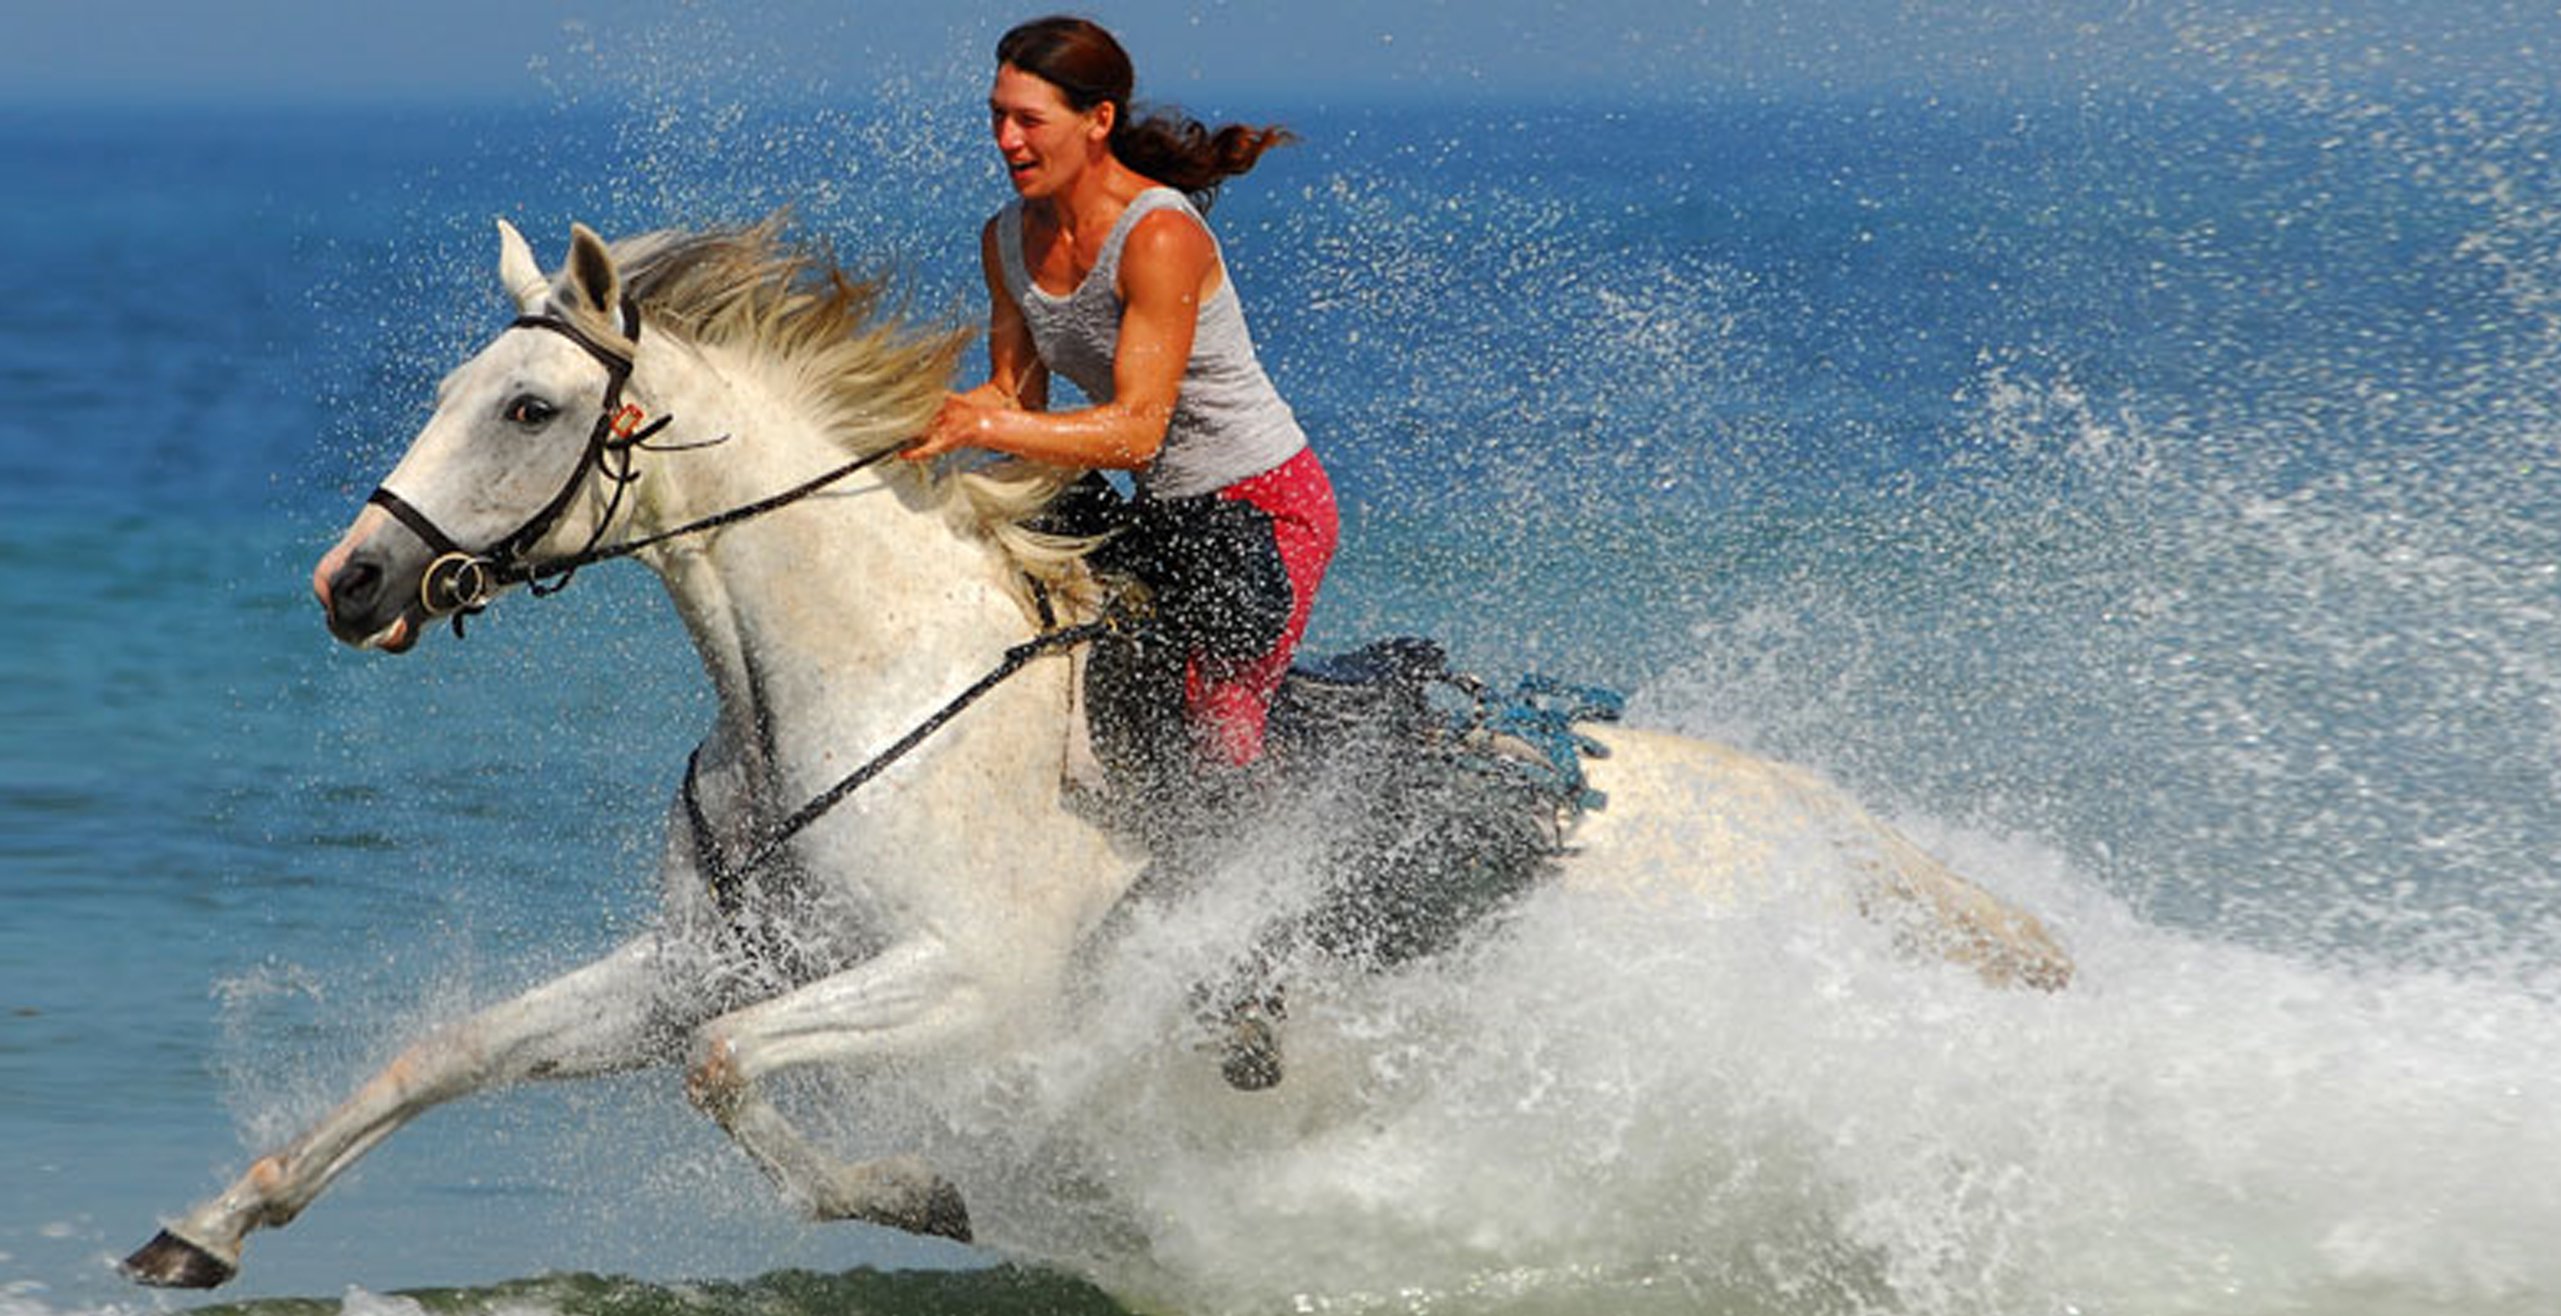 Проскачу на коне. Фотосессия с лошадью на море. Девушка на лошади по берегу. Девушка на лошади вдоль моря. Девушка скачет на лошади по берегу.